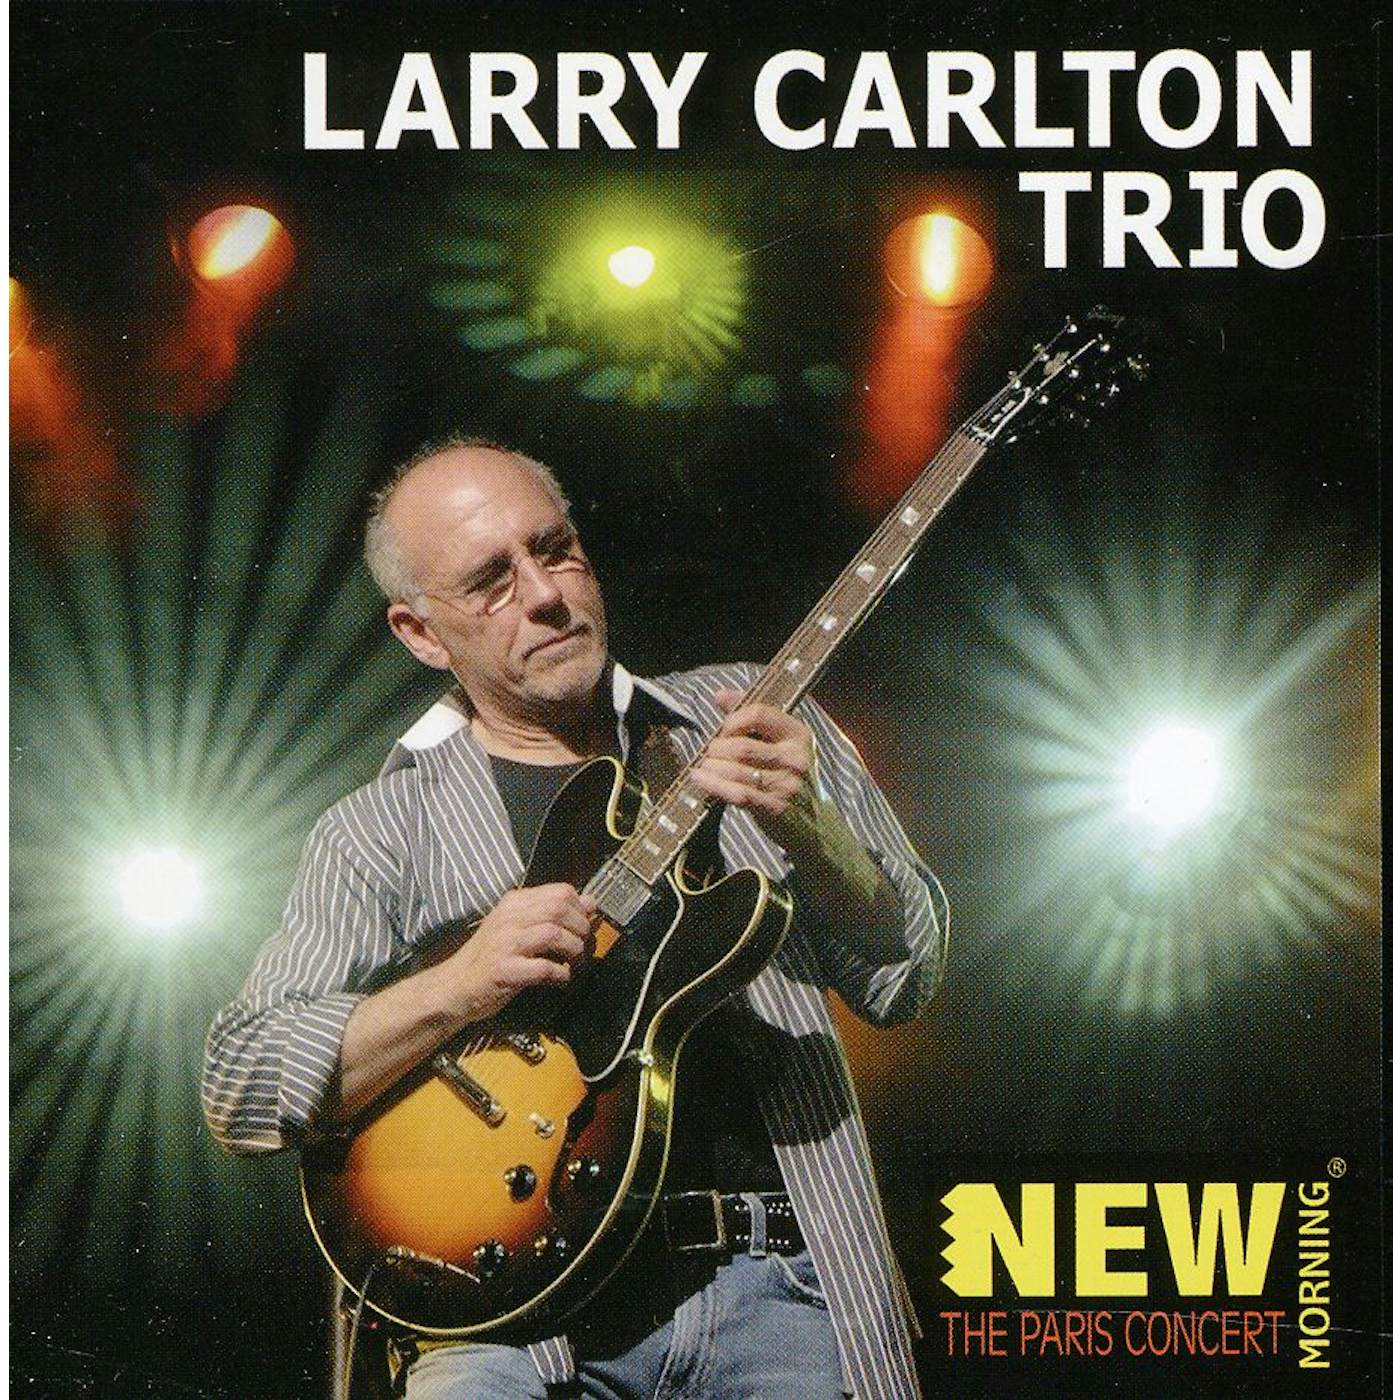 Larry Carlton PARIS CONCERT CD